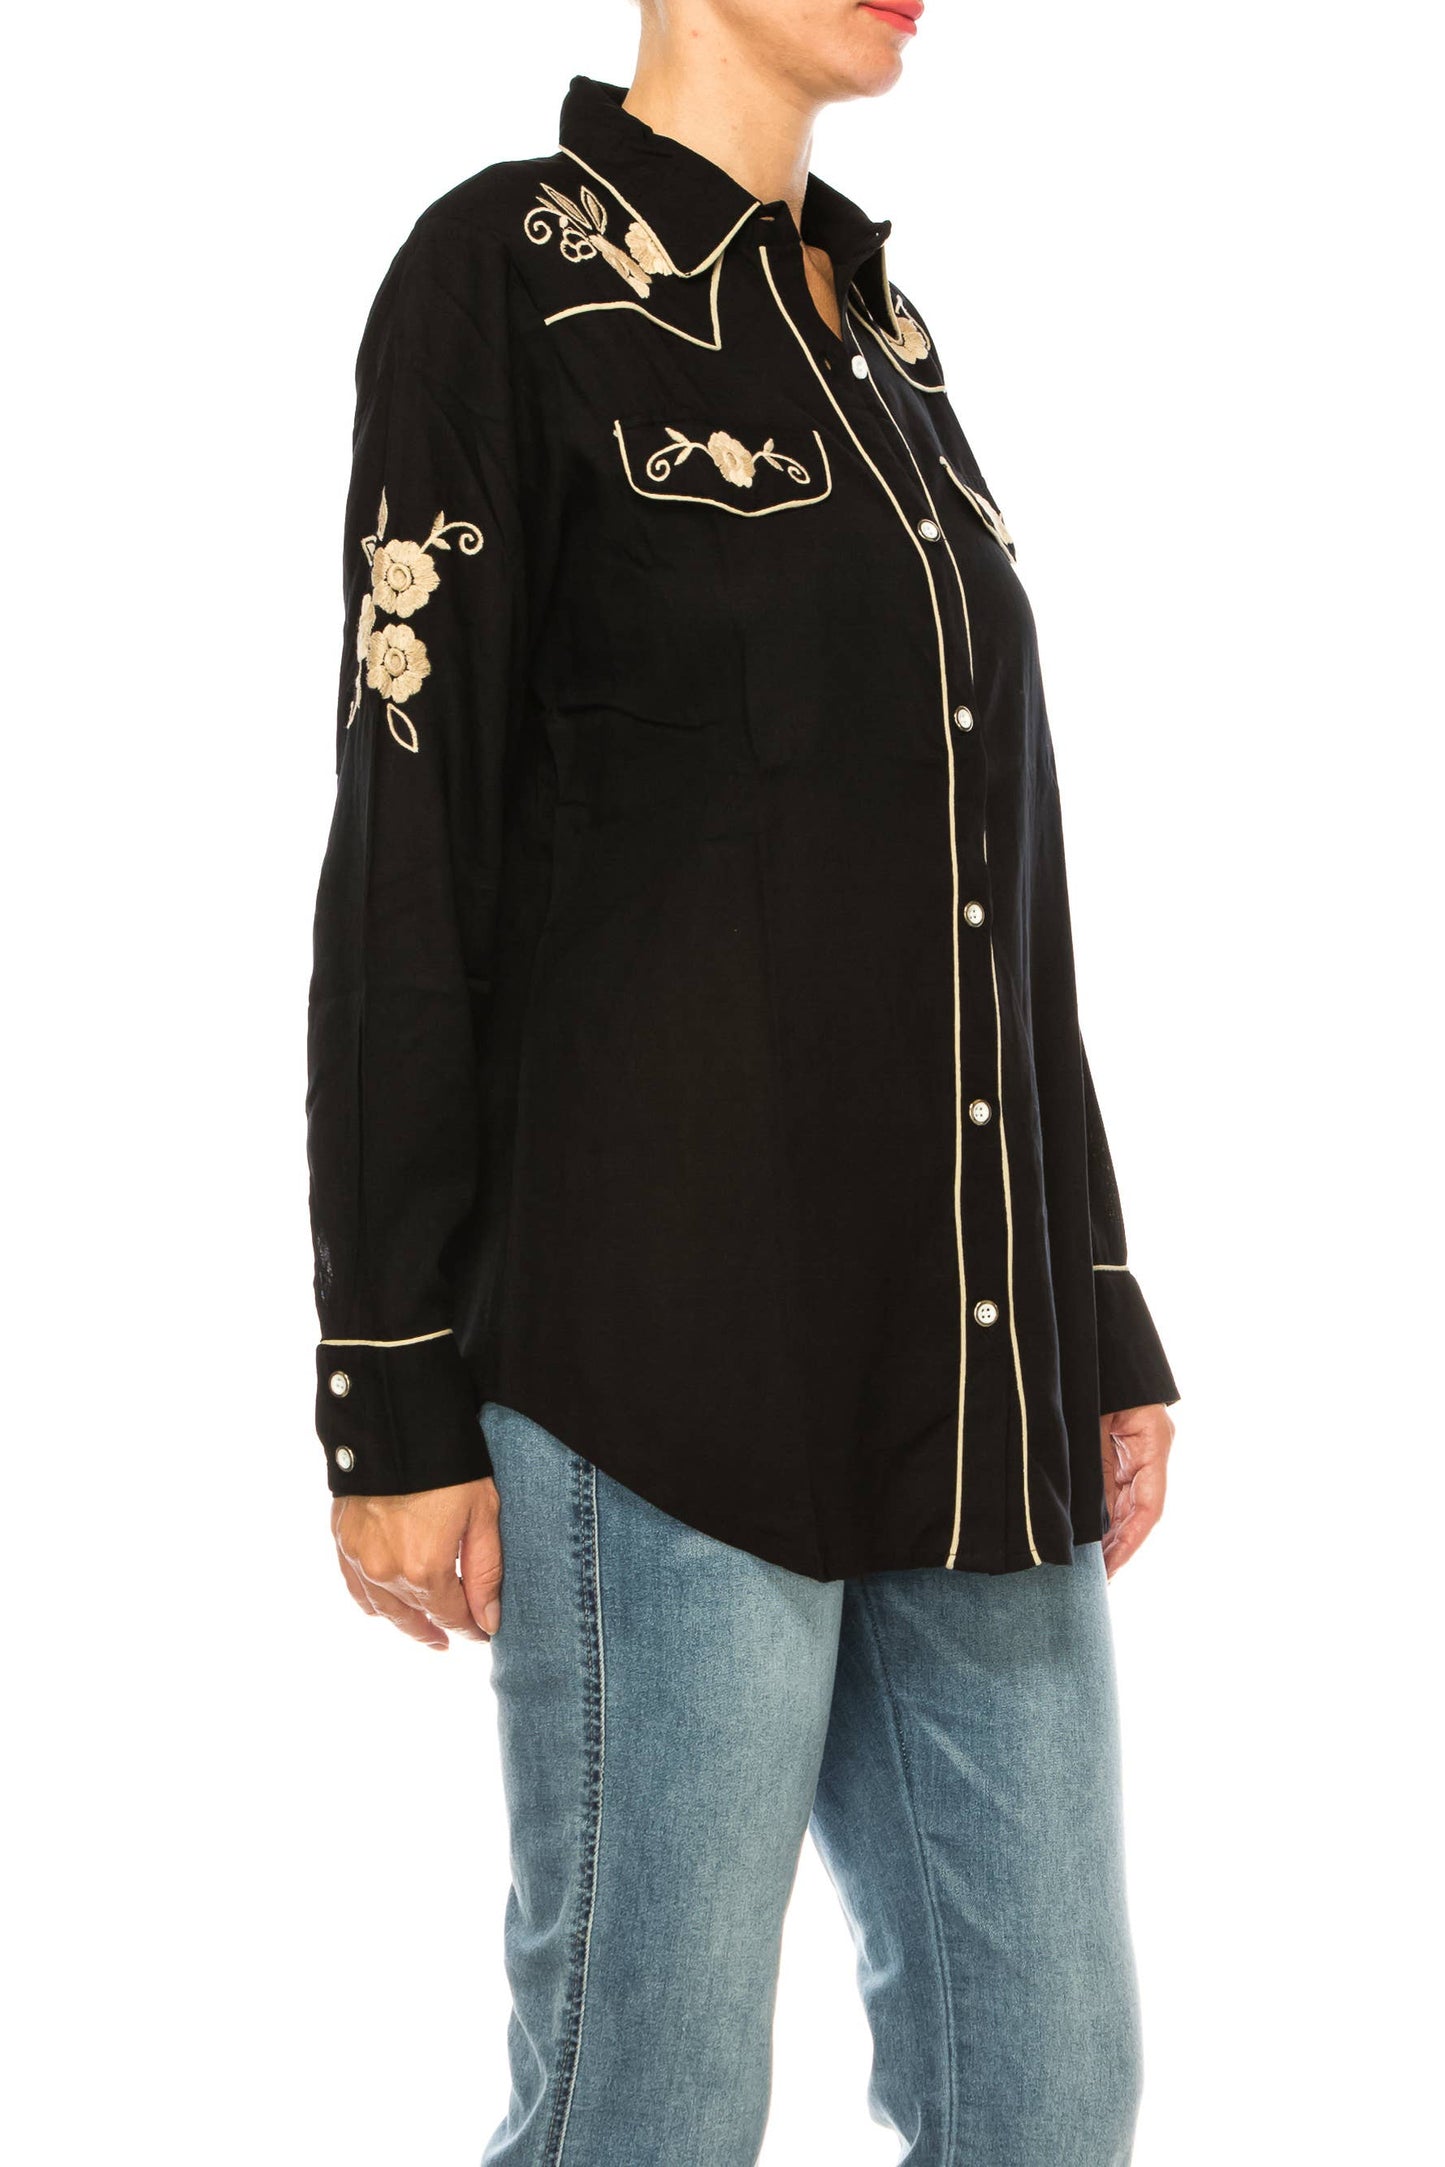 Magazine Clothing - Black Western Shirt with Embroidery: Large